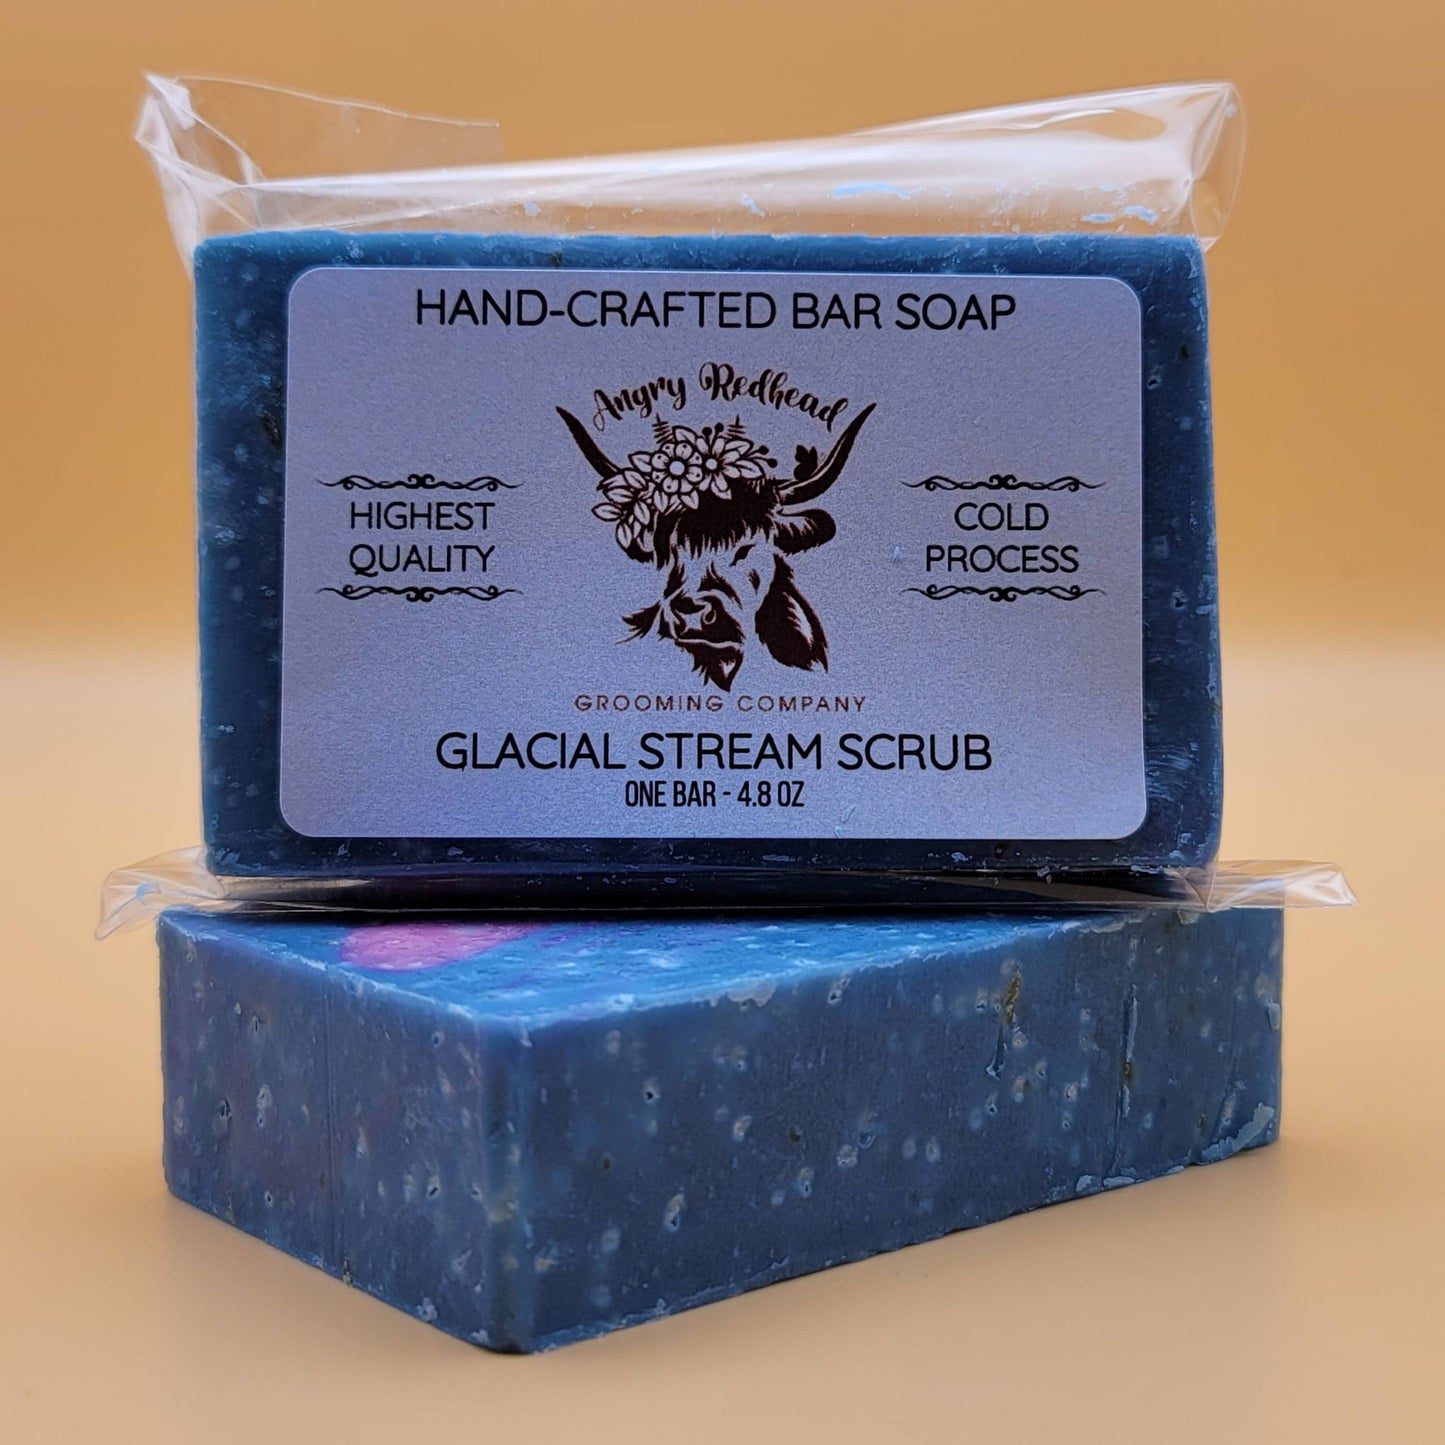 Glacial Stream Scrub Bar Soap by Angry Redhead Grooming Co - angryredheadgrooming.com